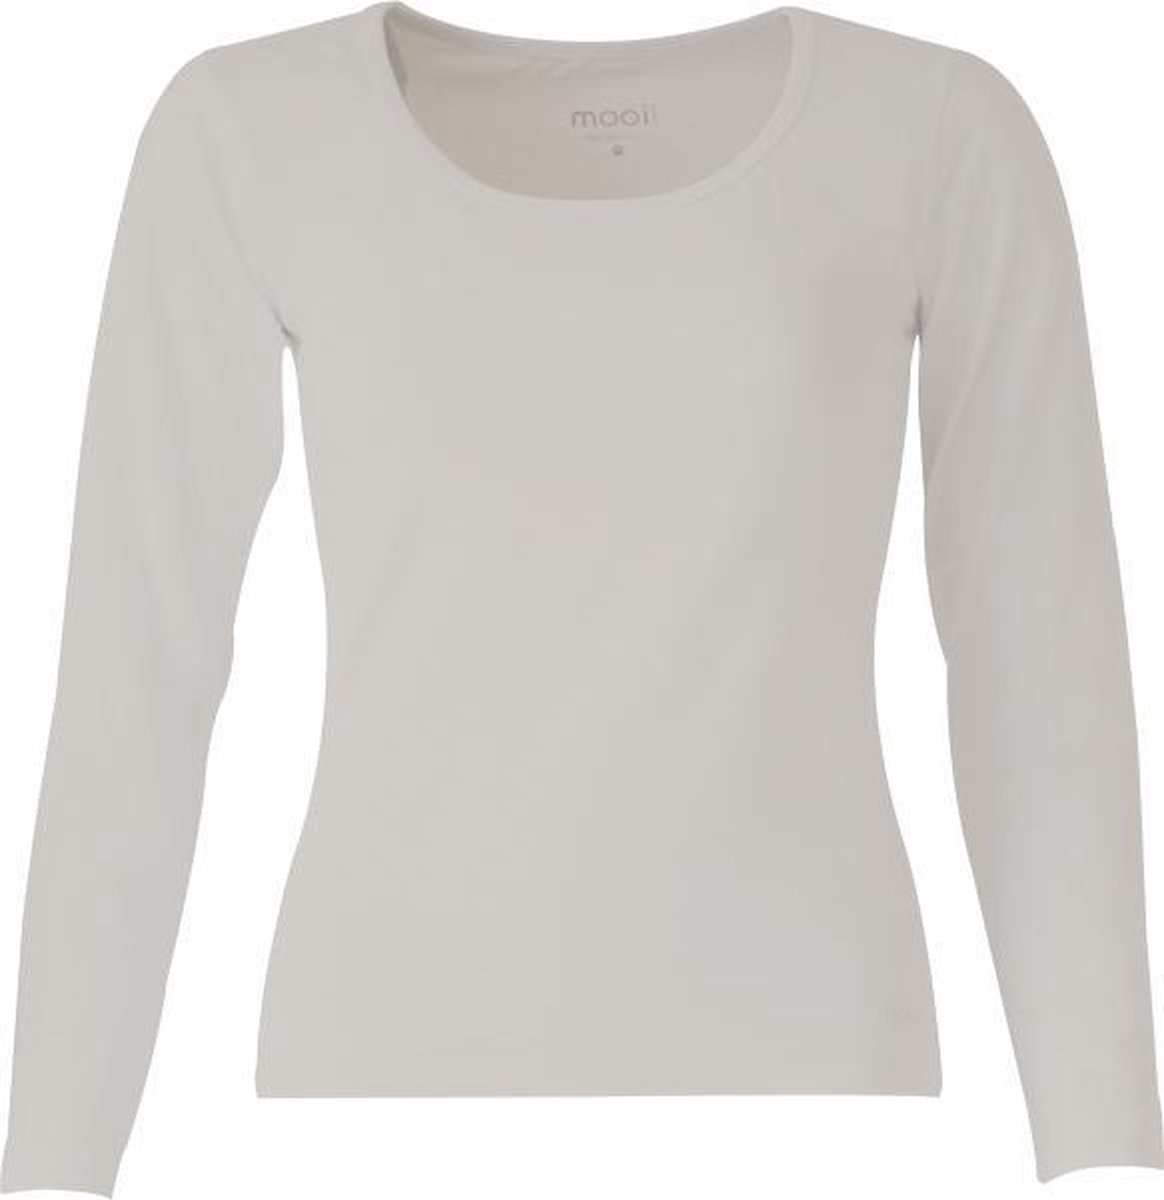 MOOI! Company -T-shirt Arlette lange mouw - O-Hals - Aansluitend model - Kleur Stone - XL